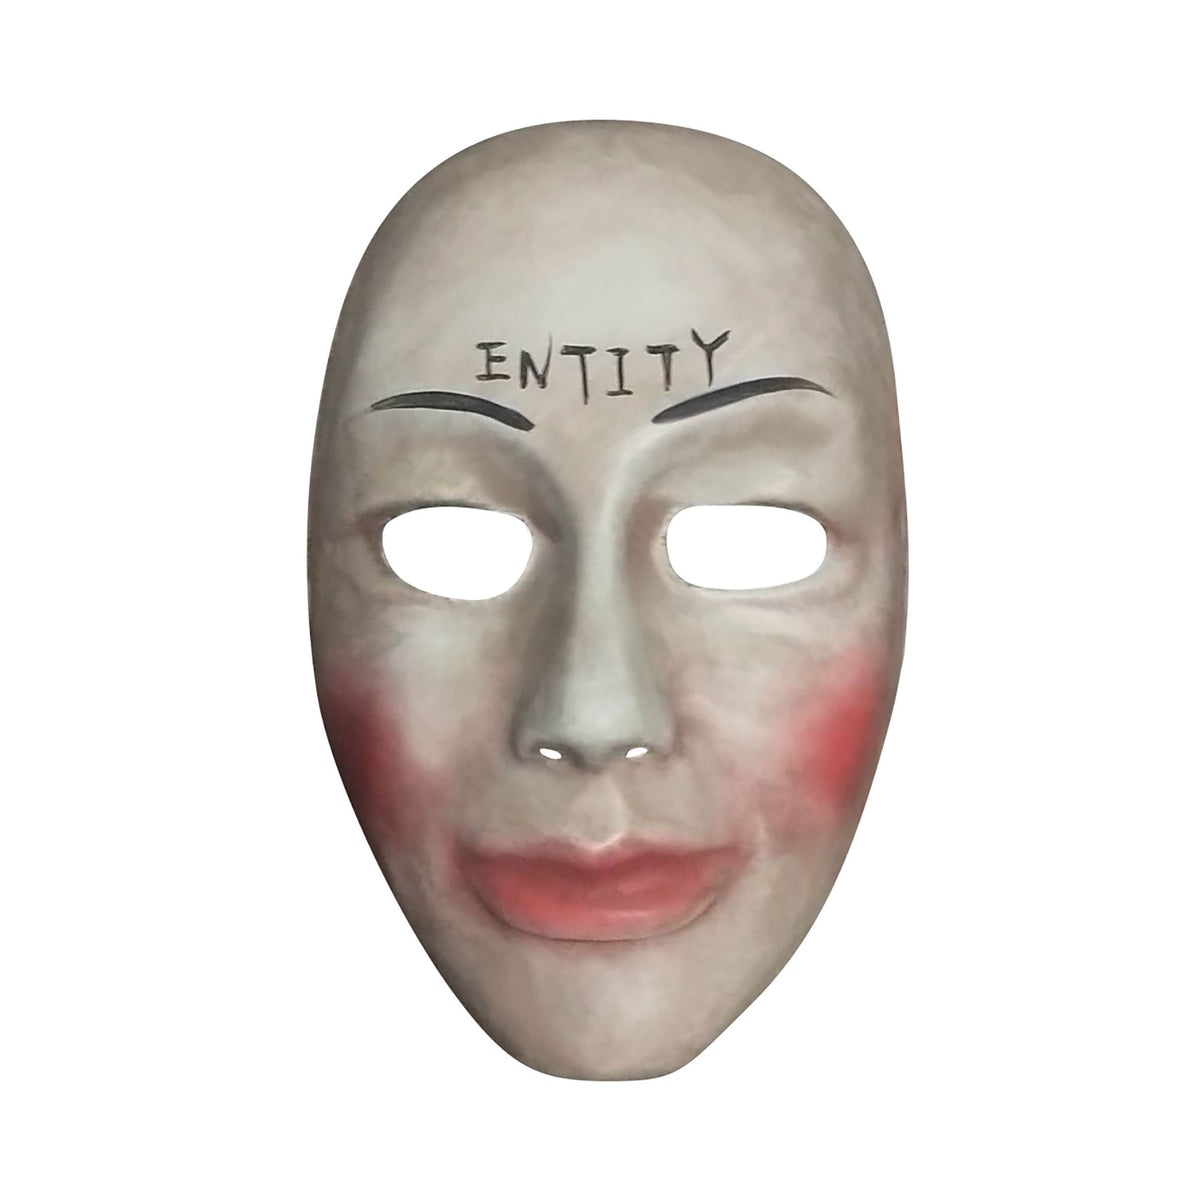 Bristol Novelty Unisex Adults Entity Mask Discounts On Great Brands